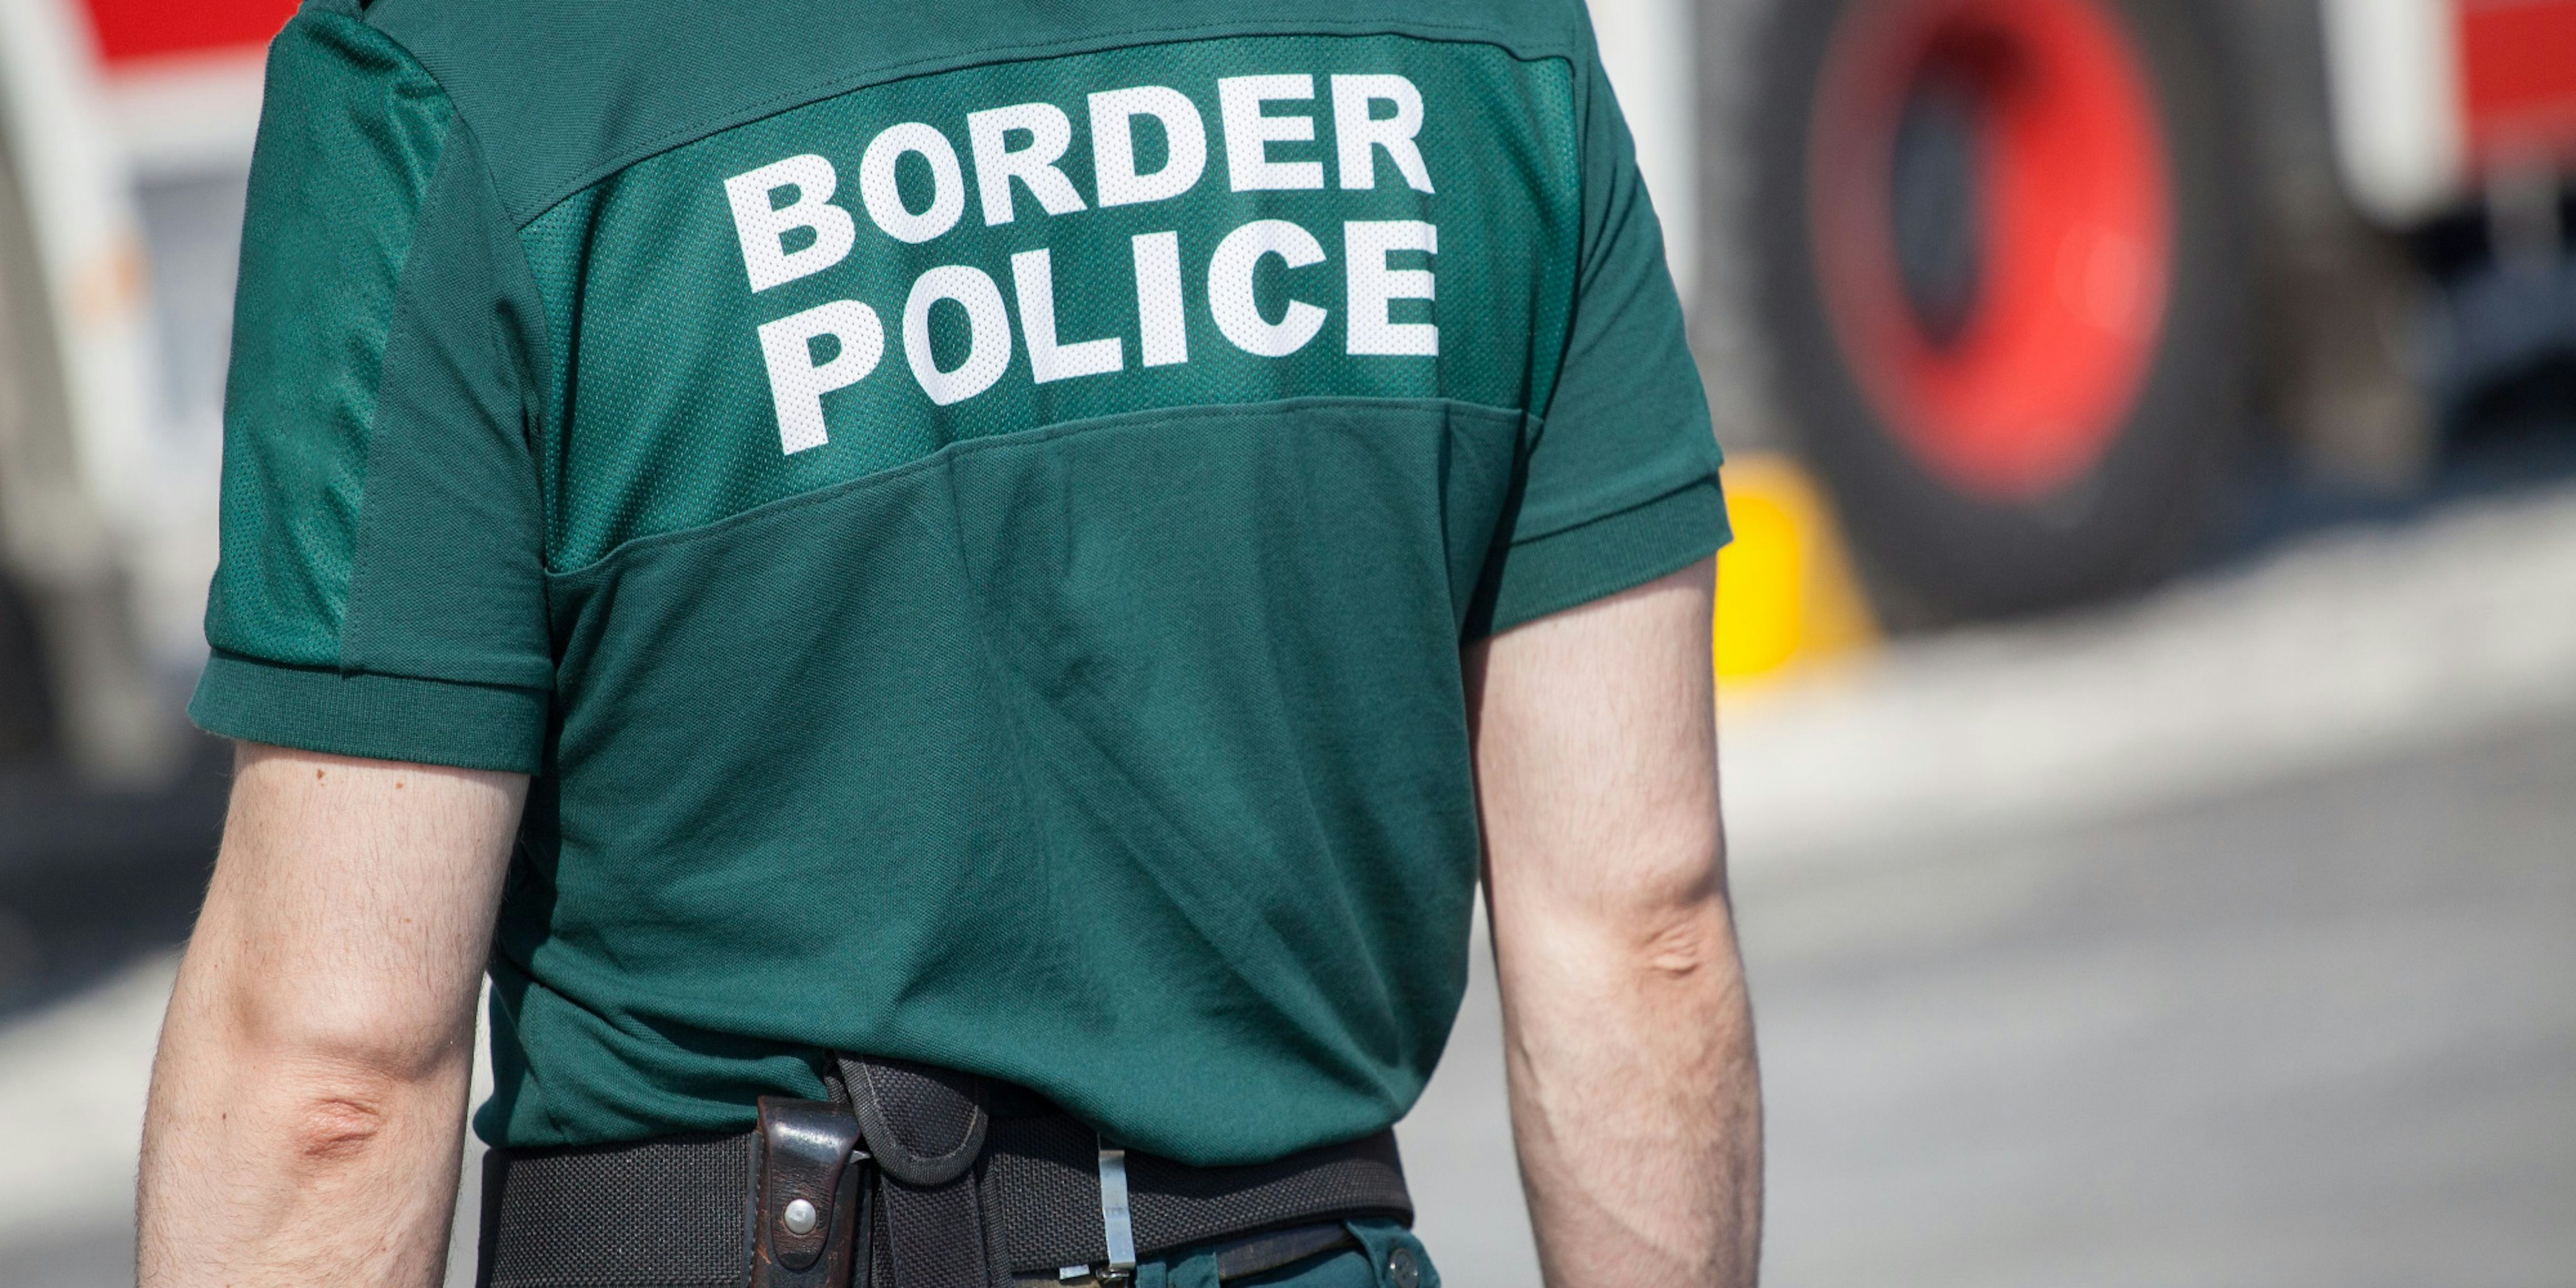 Person facing away from camera, wearing green Border Police shirt